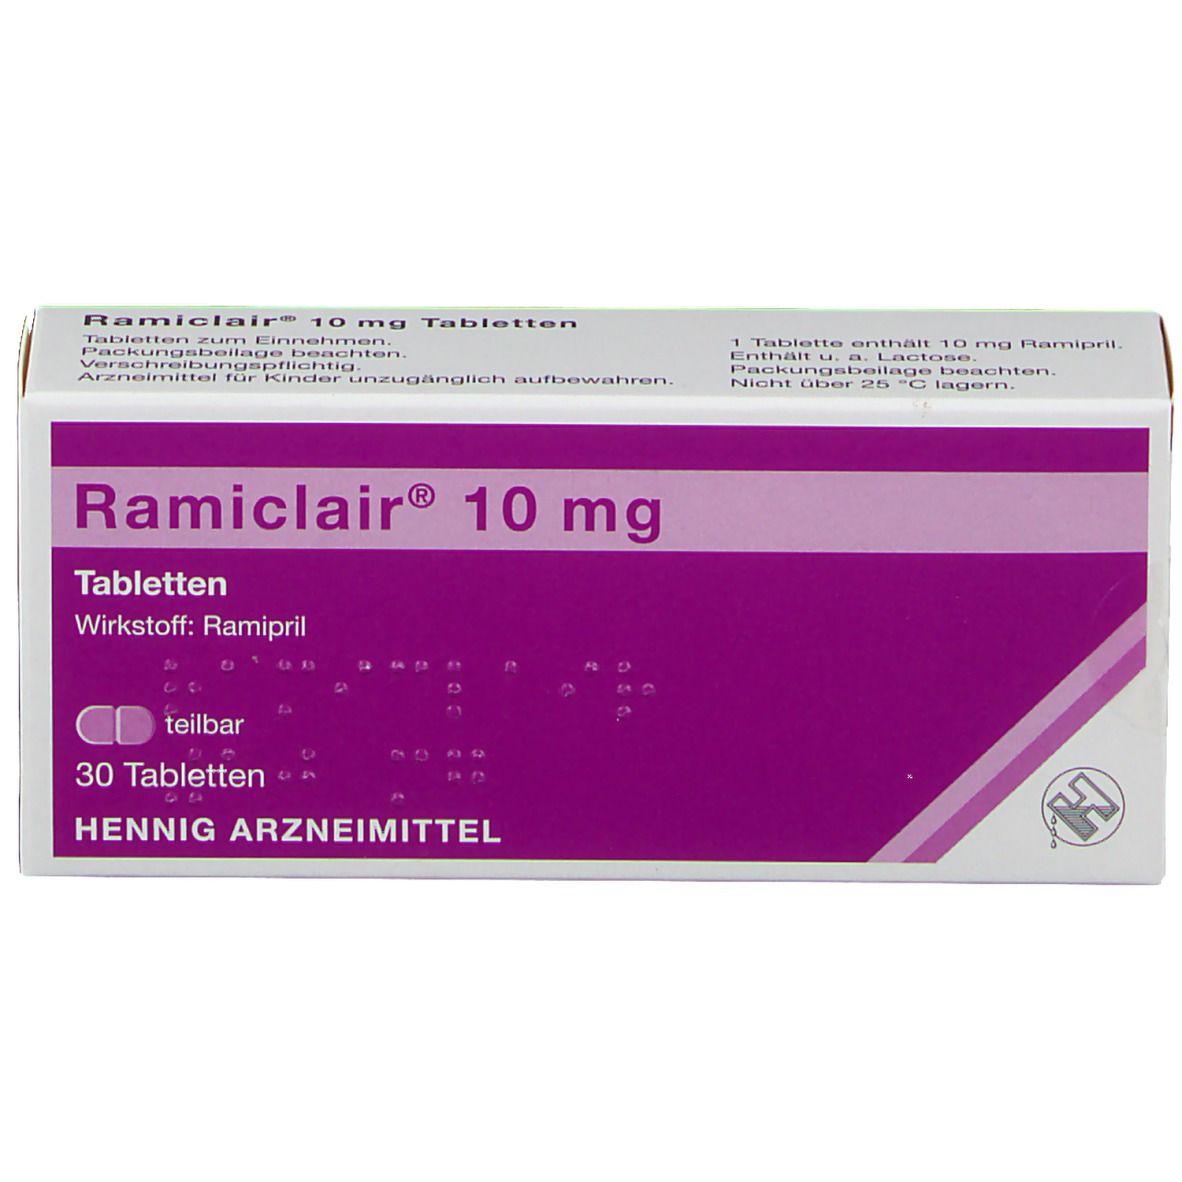 Ramiclair® 10 mg